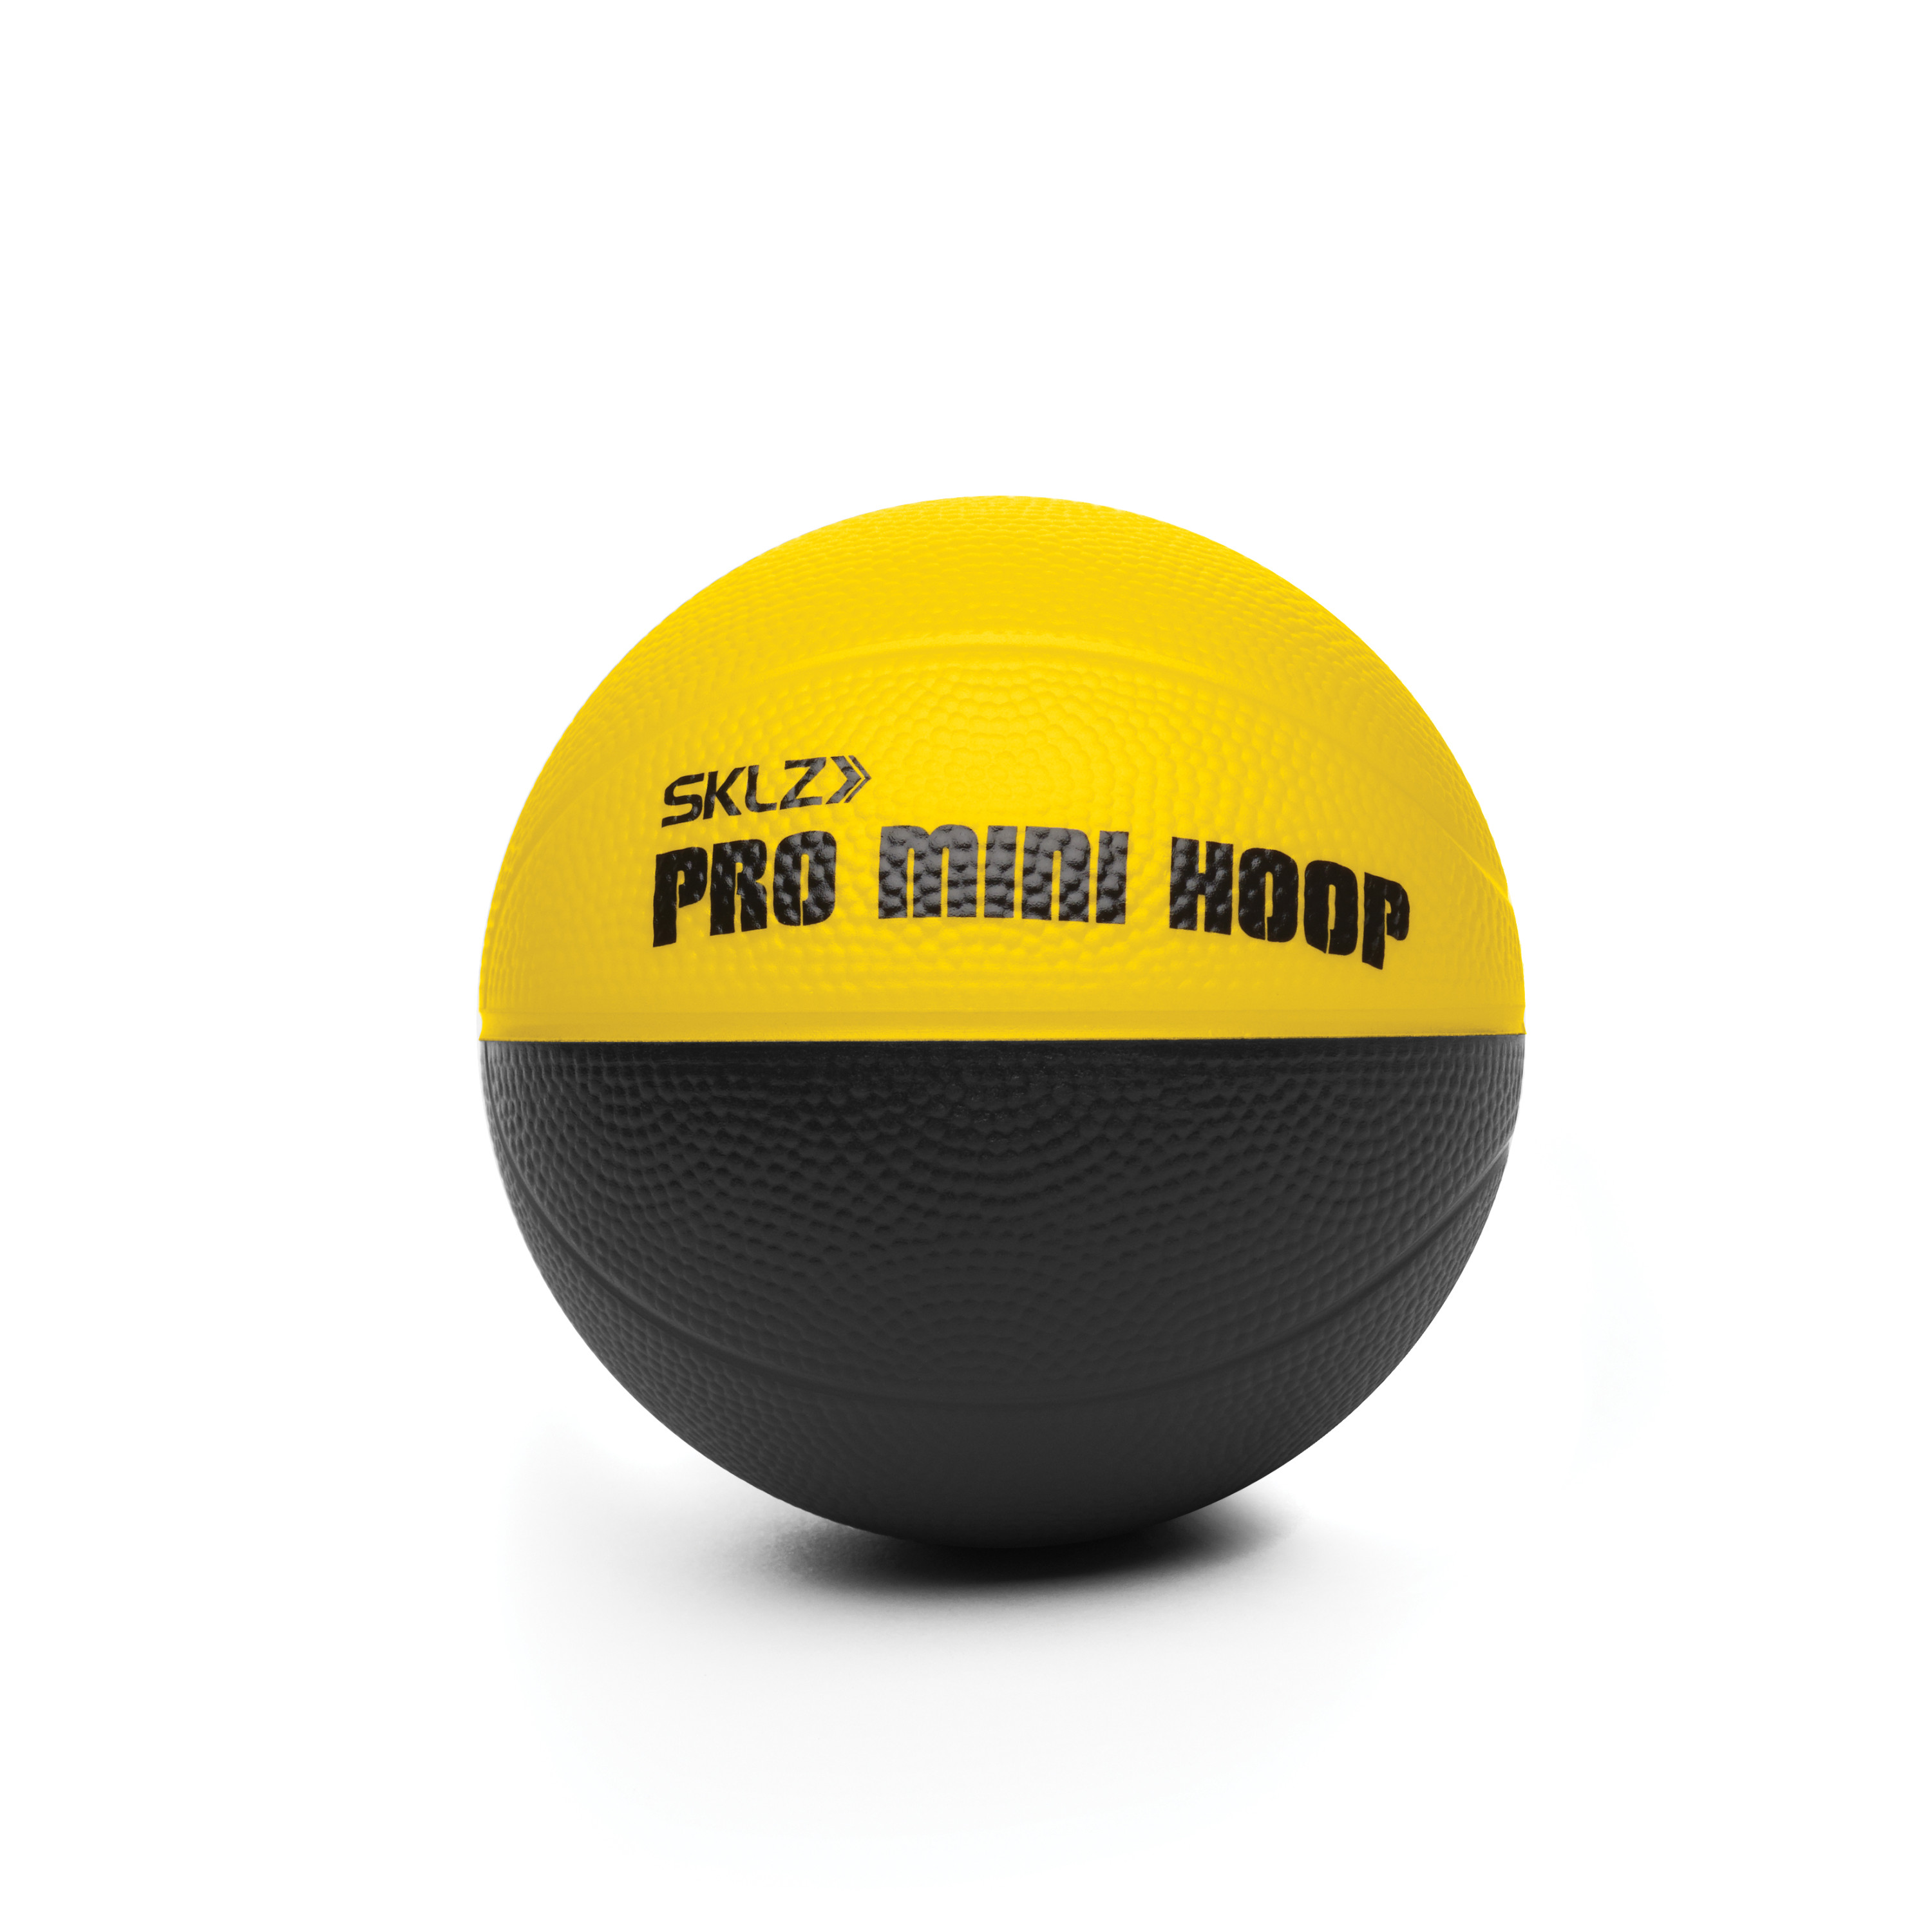 SKLZ Pro Mini Micro Hoop with Foam Ball, 15"x10" - image 4 of 8